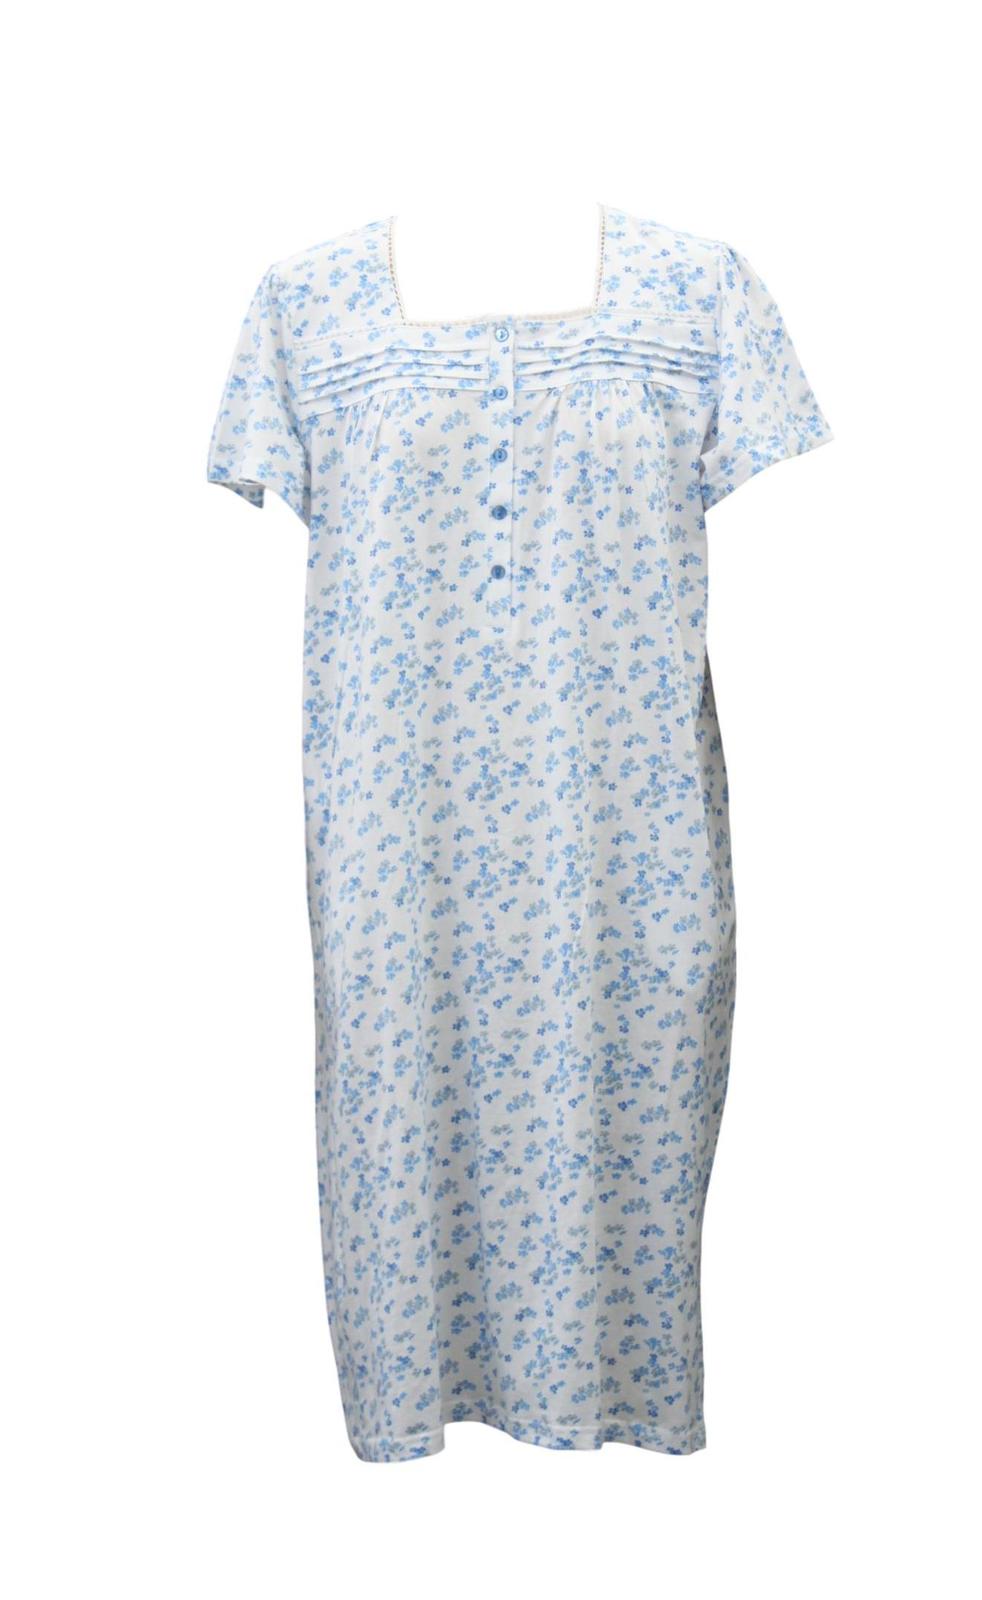 Women's 100% Cotton Summer Short Sleeve Nightie Night Gown Pajamas ...